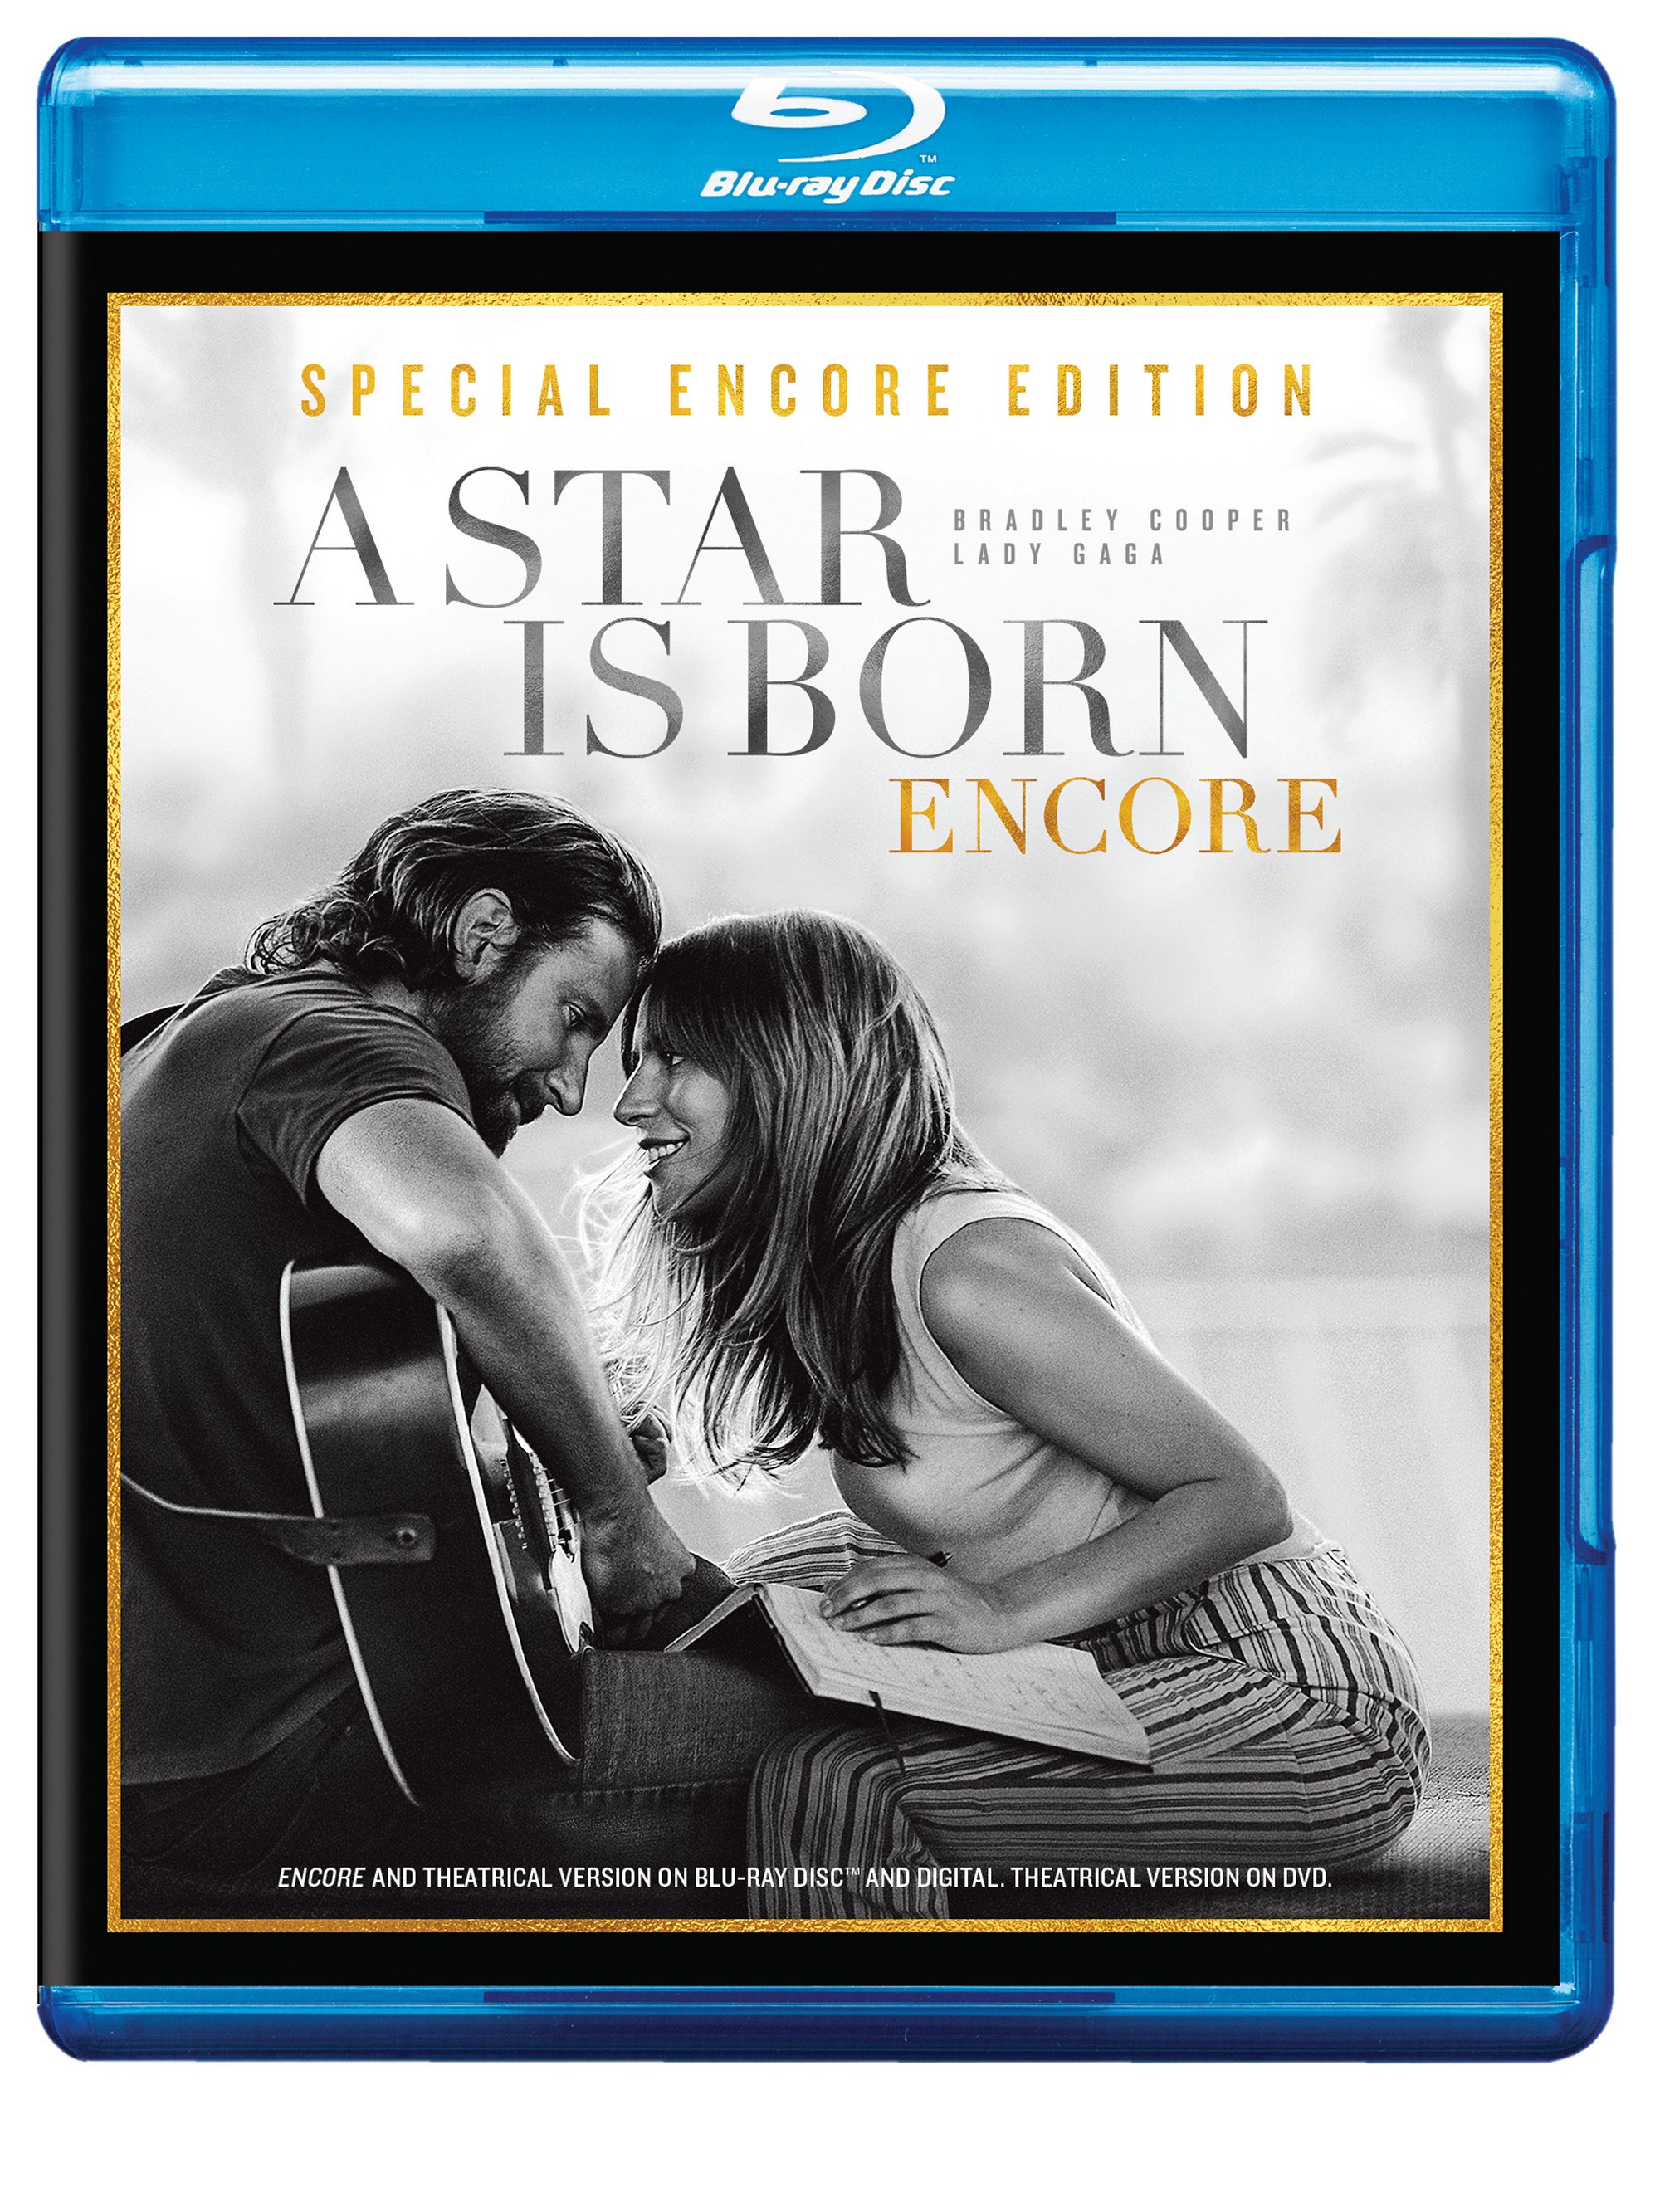 A Star Is Born: Encore Edition (Blu-ray) - Blu-ray [ 2018 ]  - Drama Movies On Blu-ray - Movies On GRUV